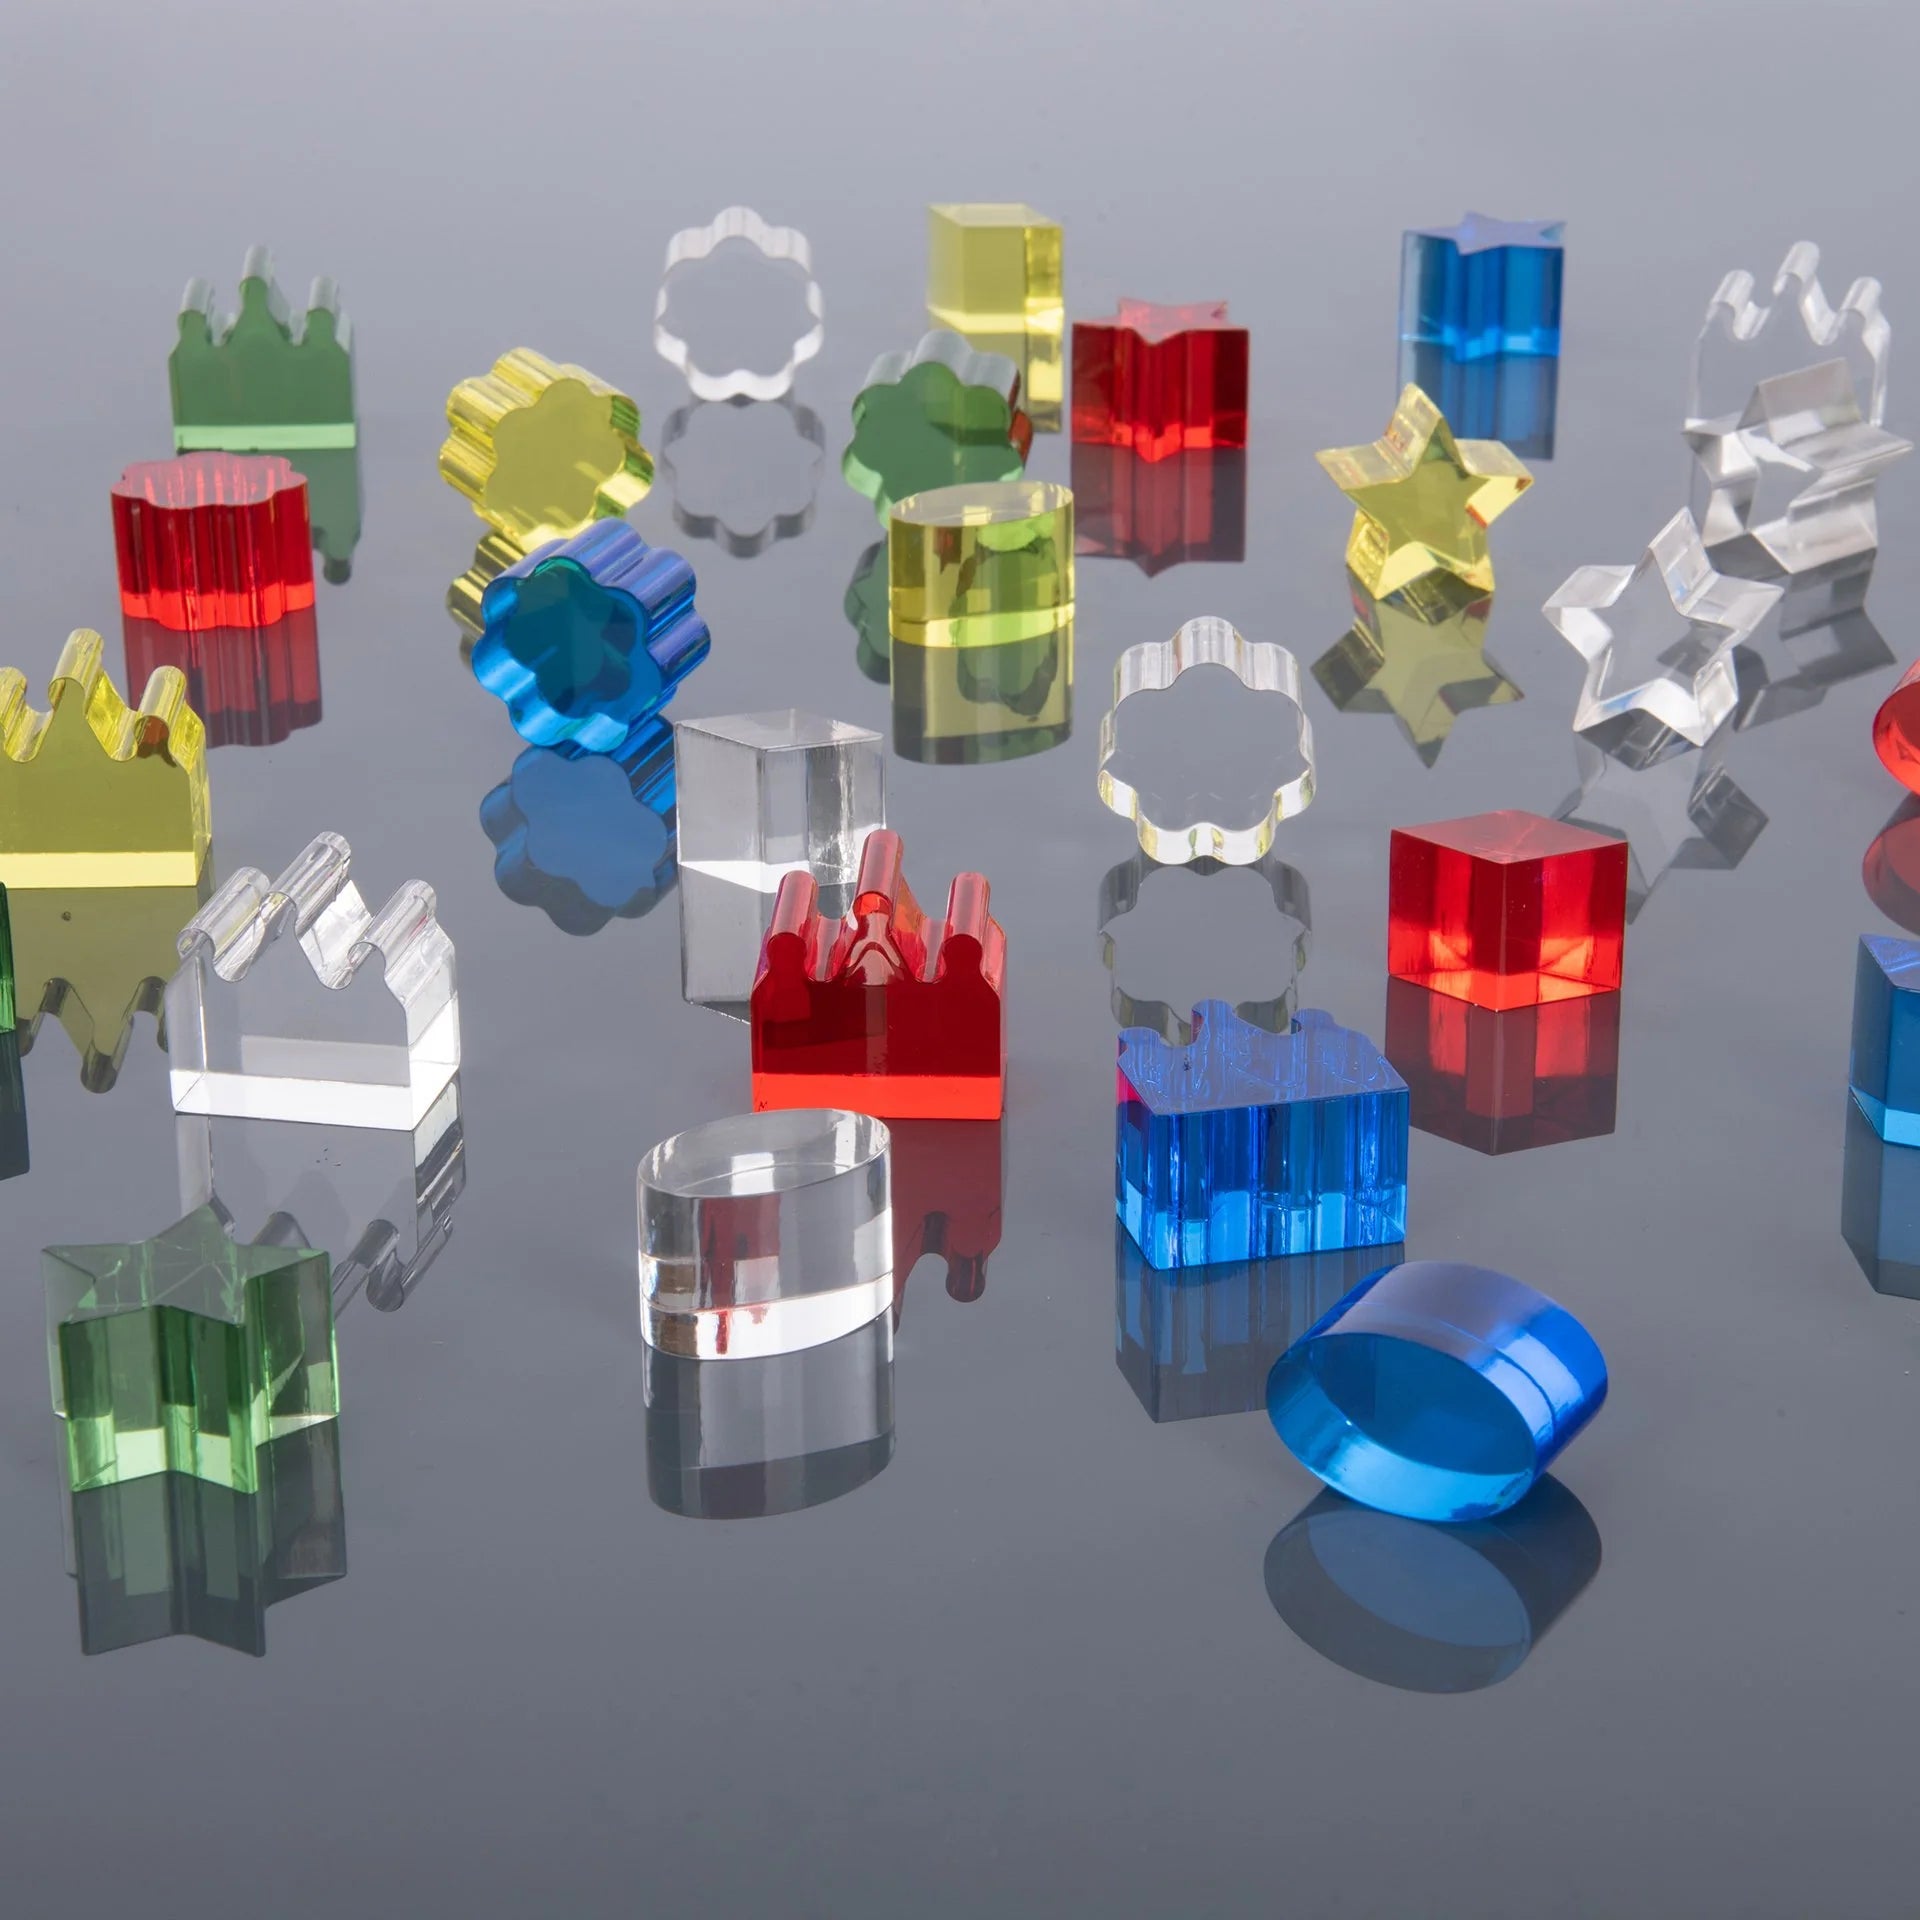 TickiT: przezroczyste klocki Colour Crystal Treasures 30 el. - Noski Noski